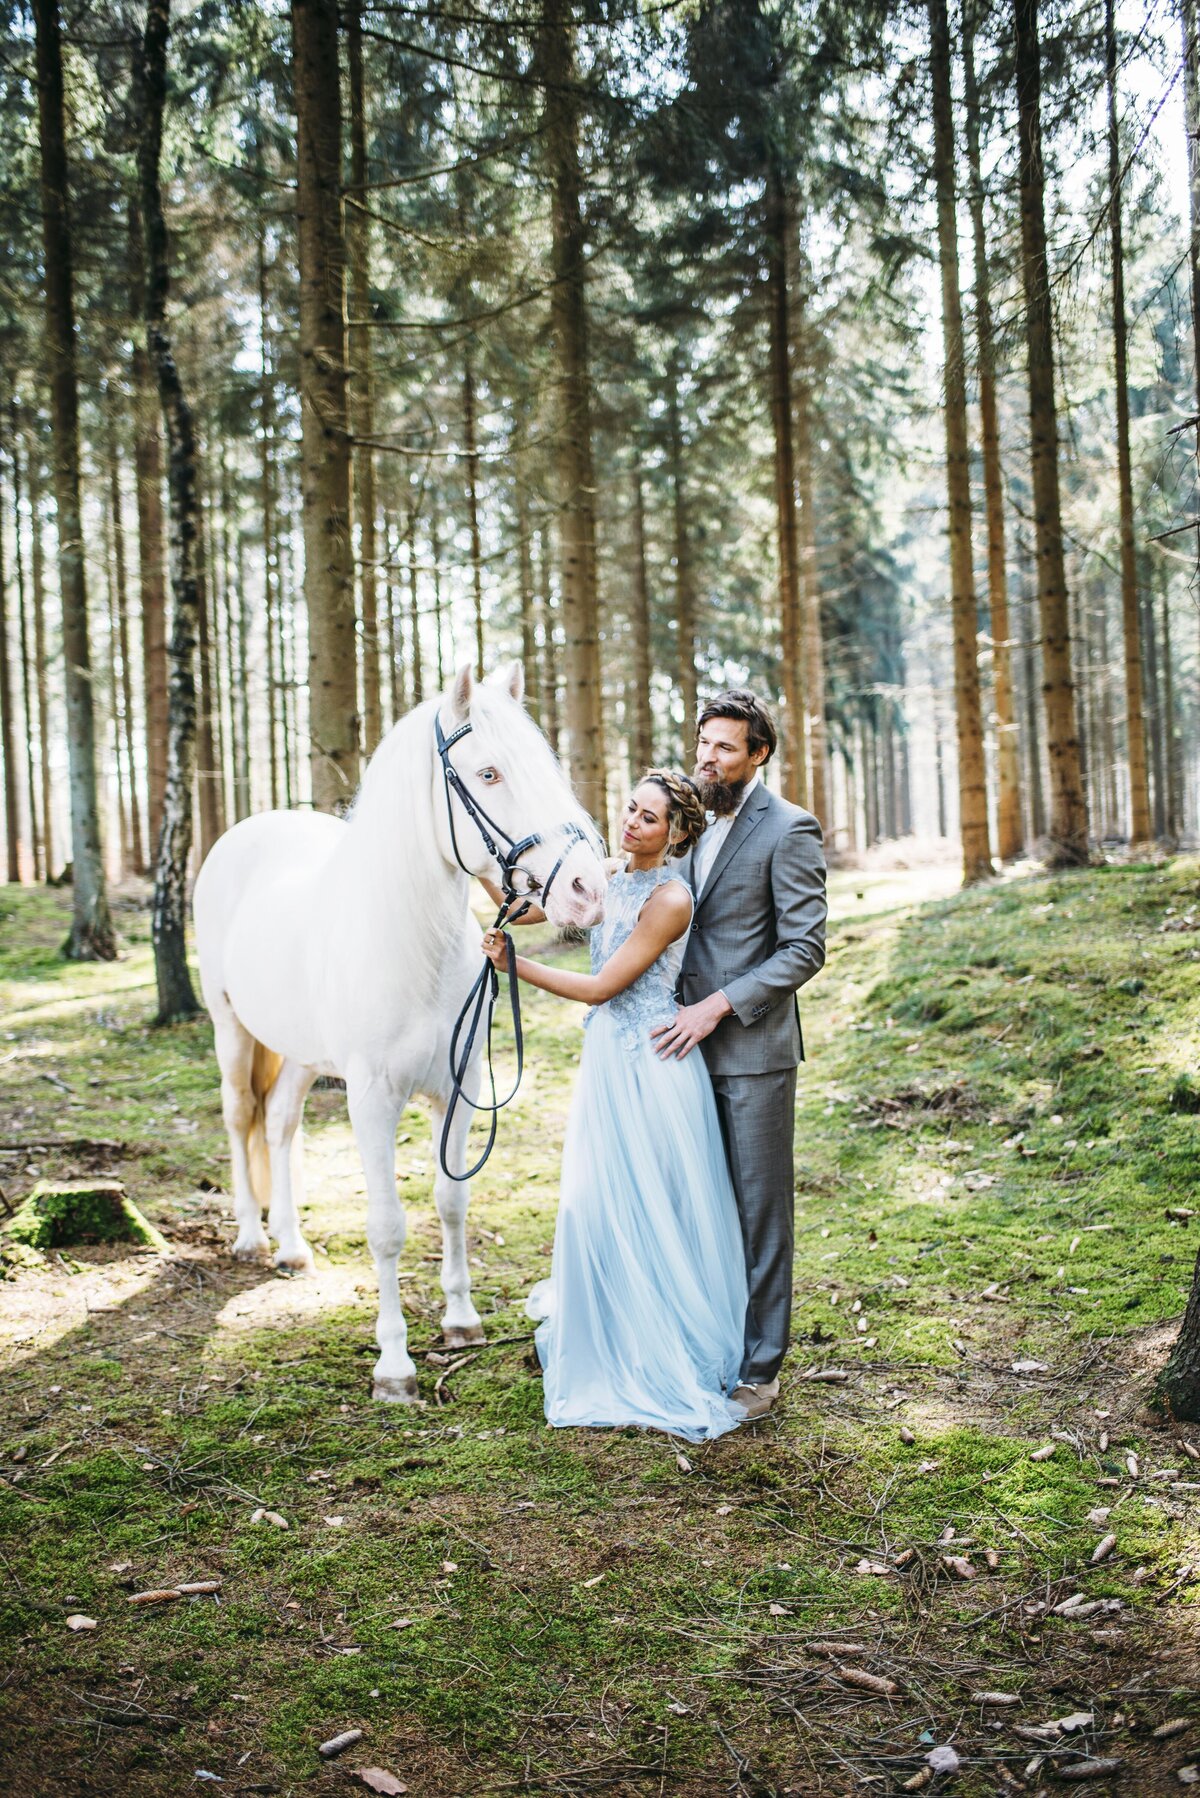 Styled Wedding Shoot- Marlon van Efferink Fotografie - 22